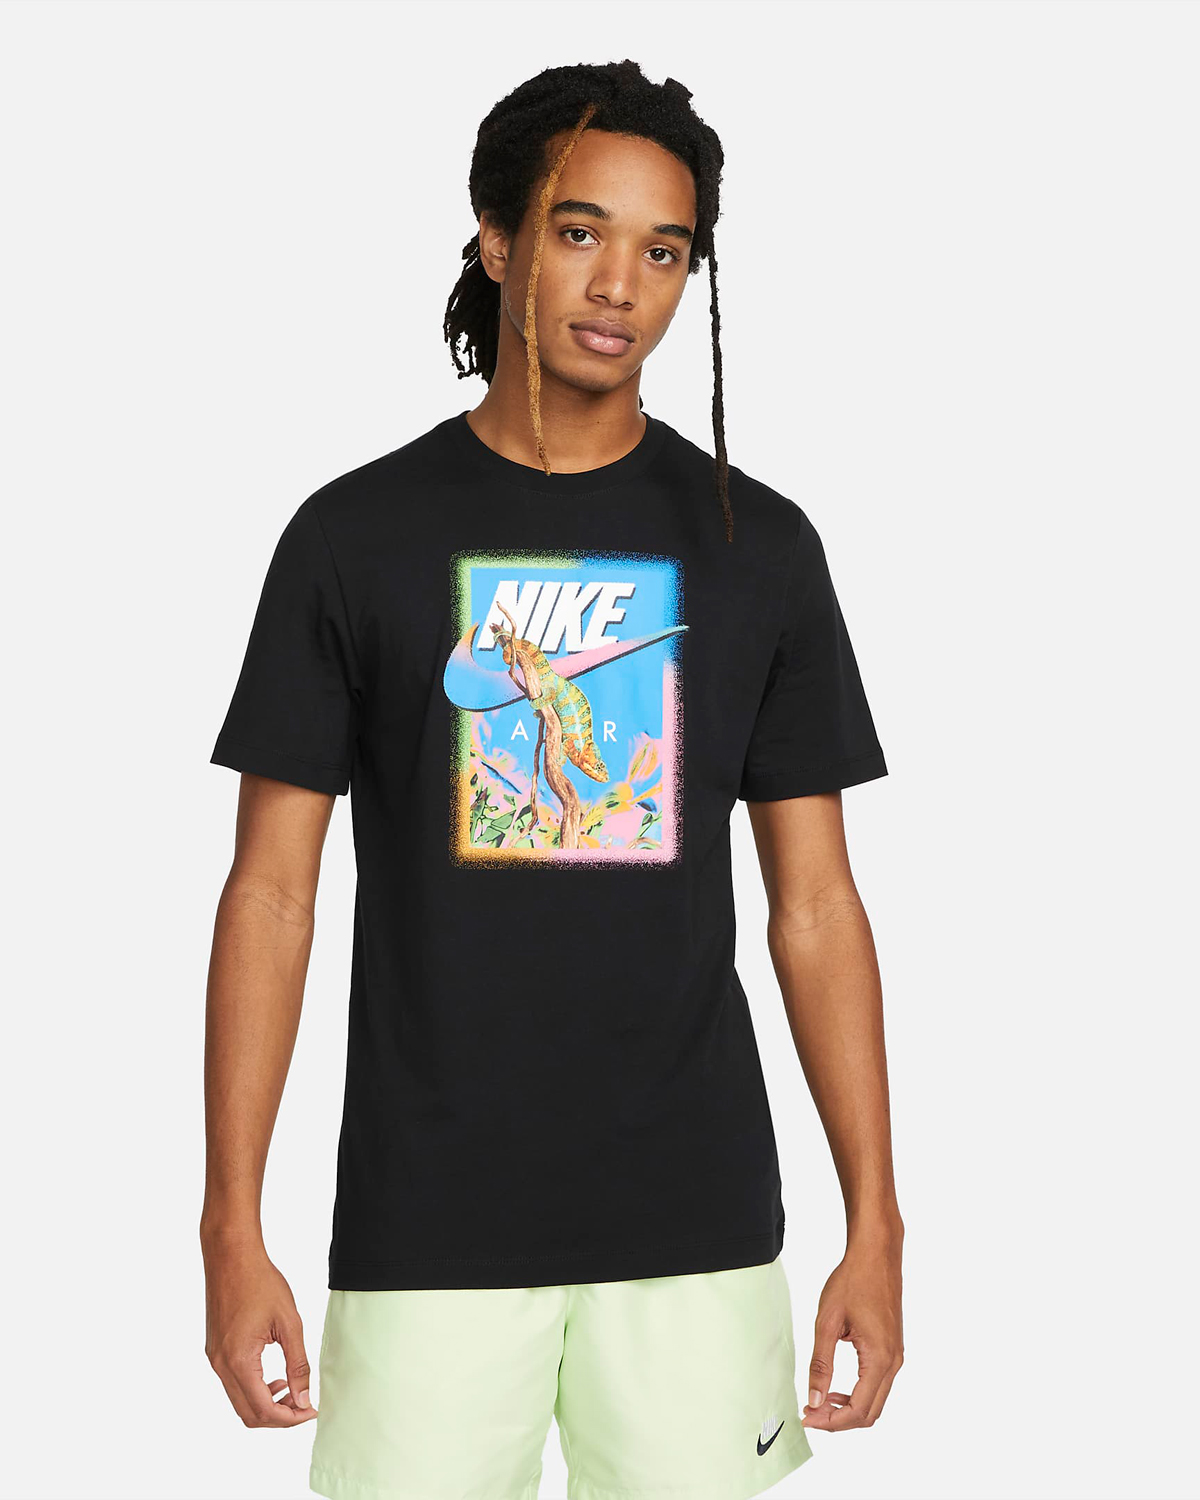 Nike-Sportswear-Chameleon-T-Shirt-Black